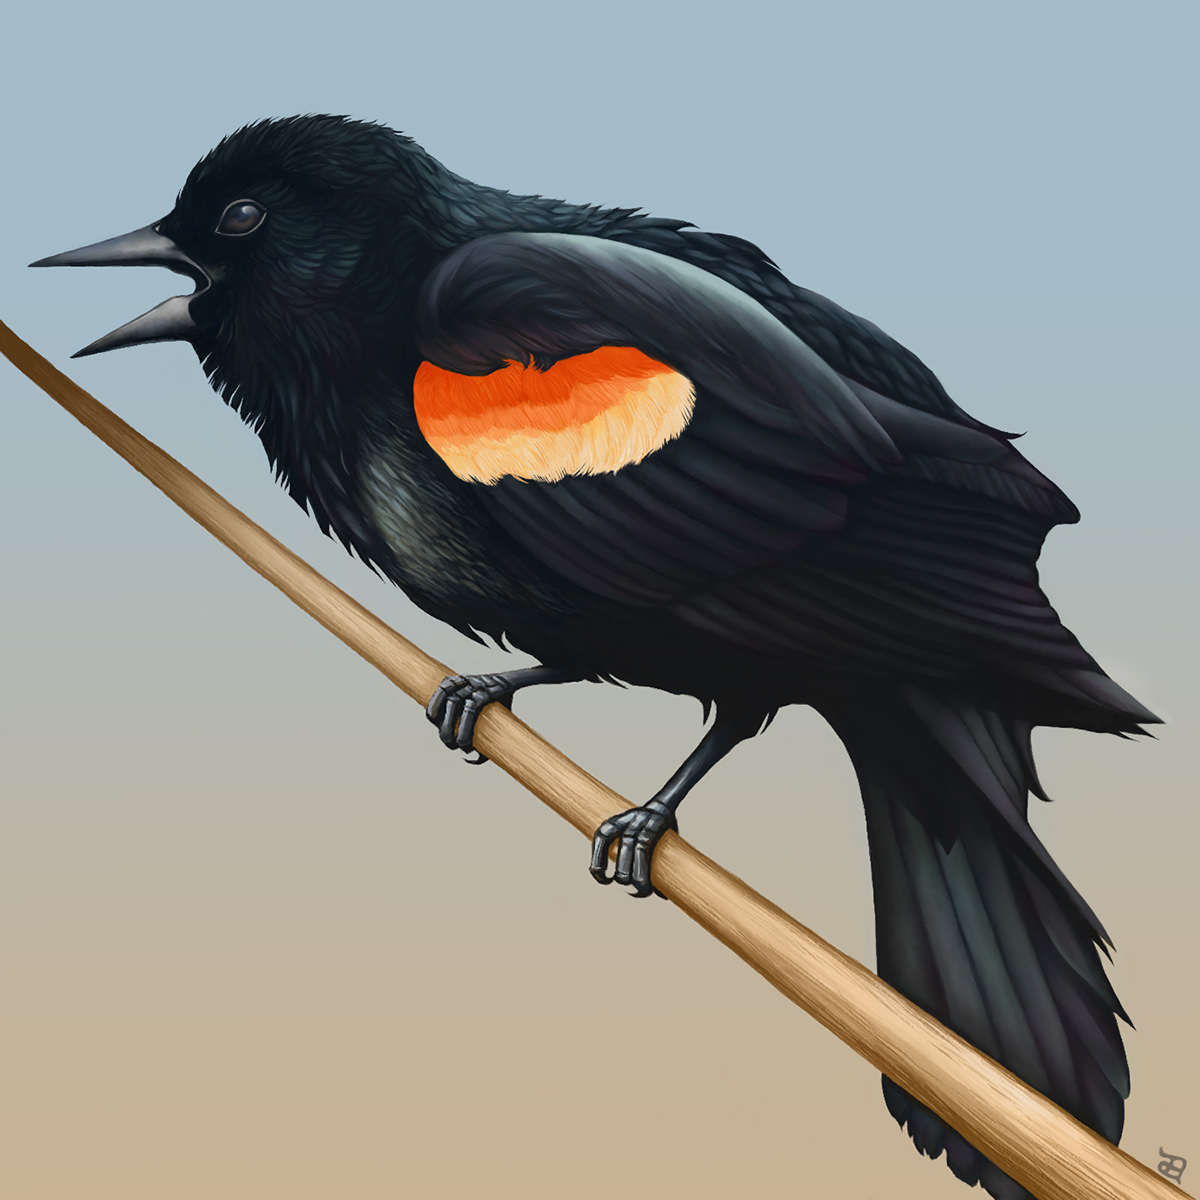 Nature bird red-winged blackbird scientific audubon iridescent Iridescence hypercrabby annie Aguirre illustrated graphic digital botanical